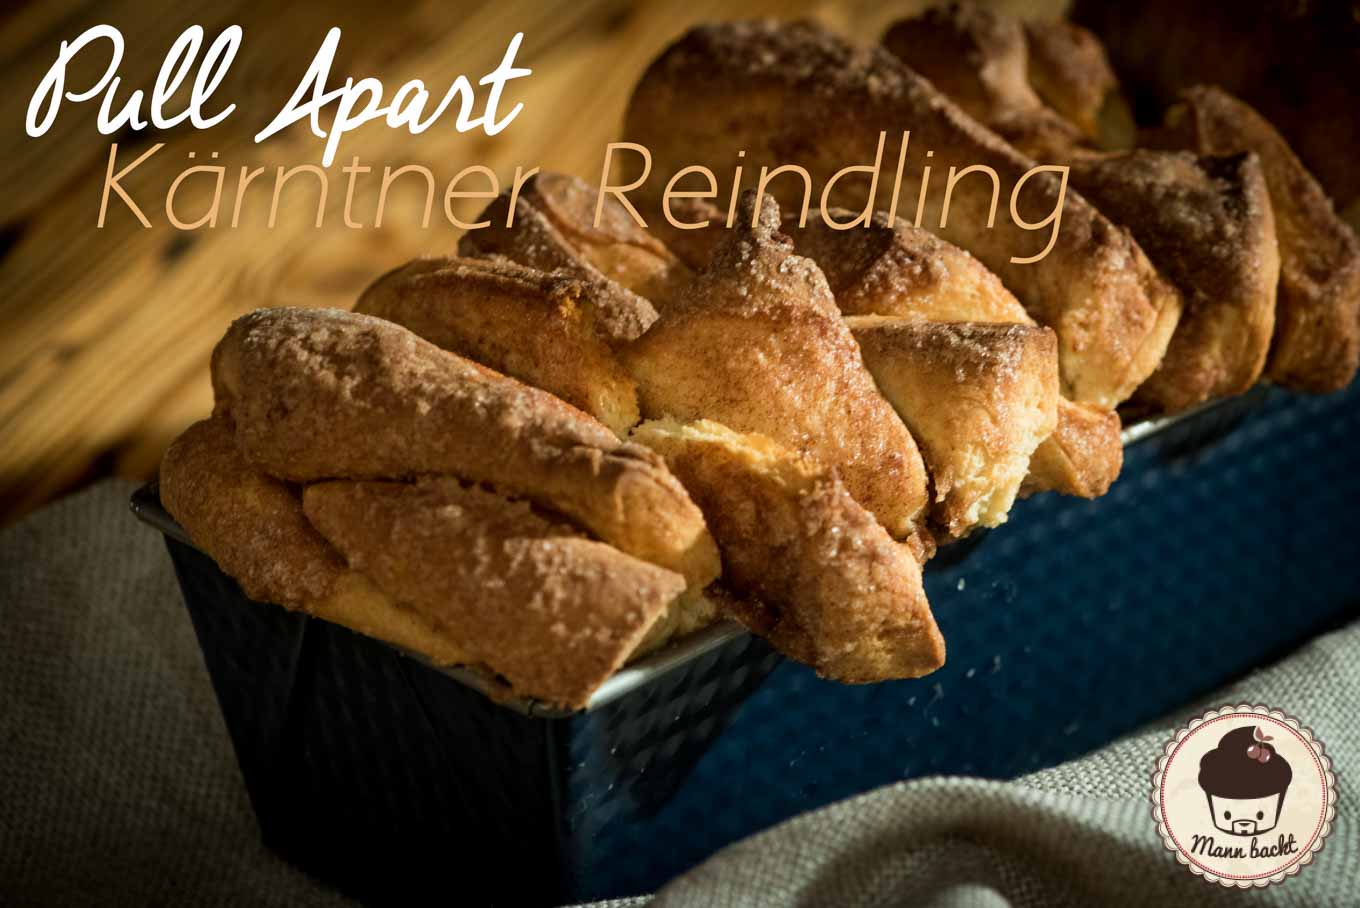 Mann backt Kaerntner Reindling reloaded pull apart bread (3 von 3)